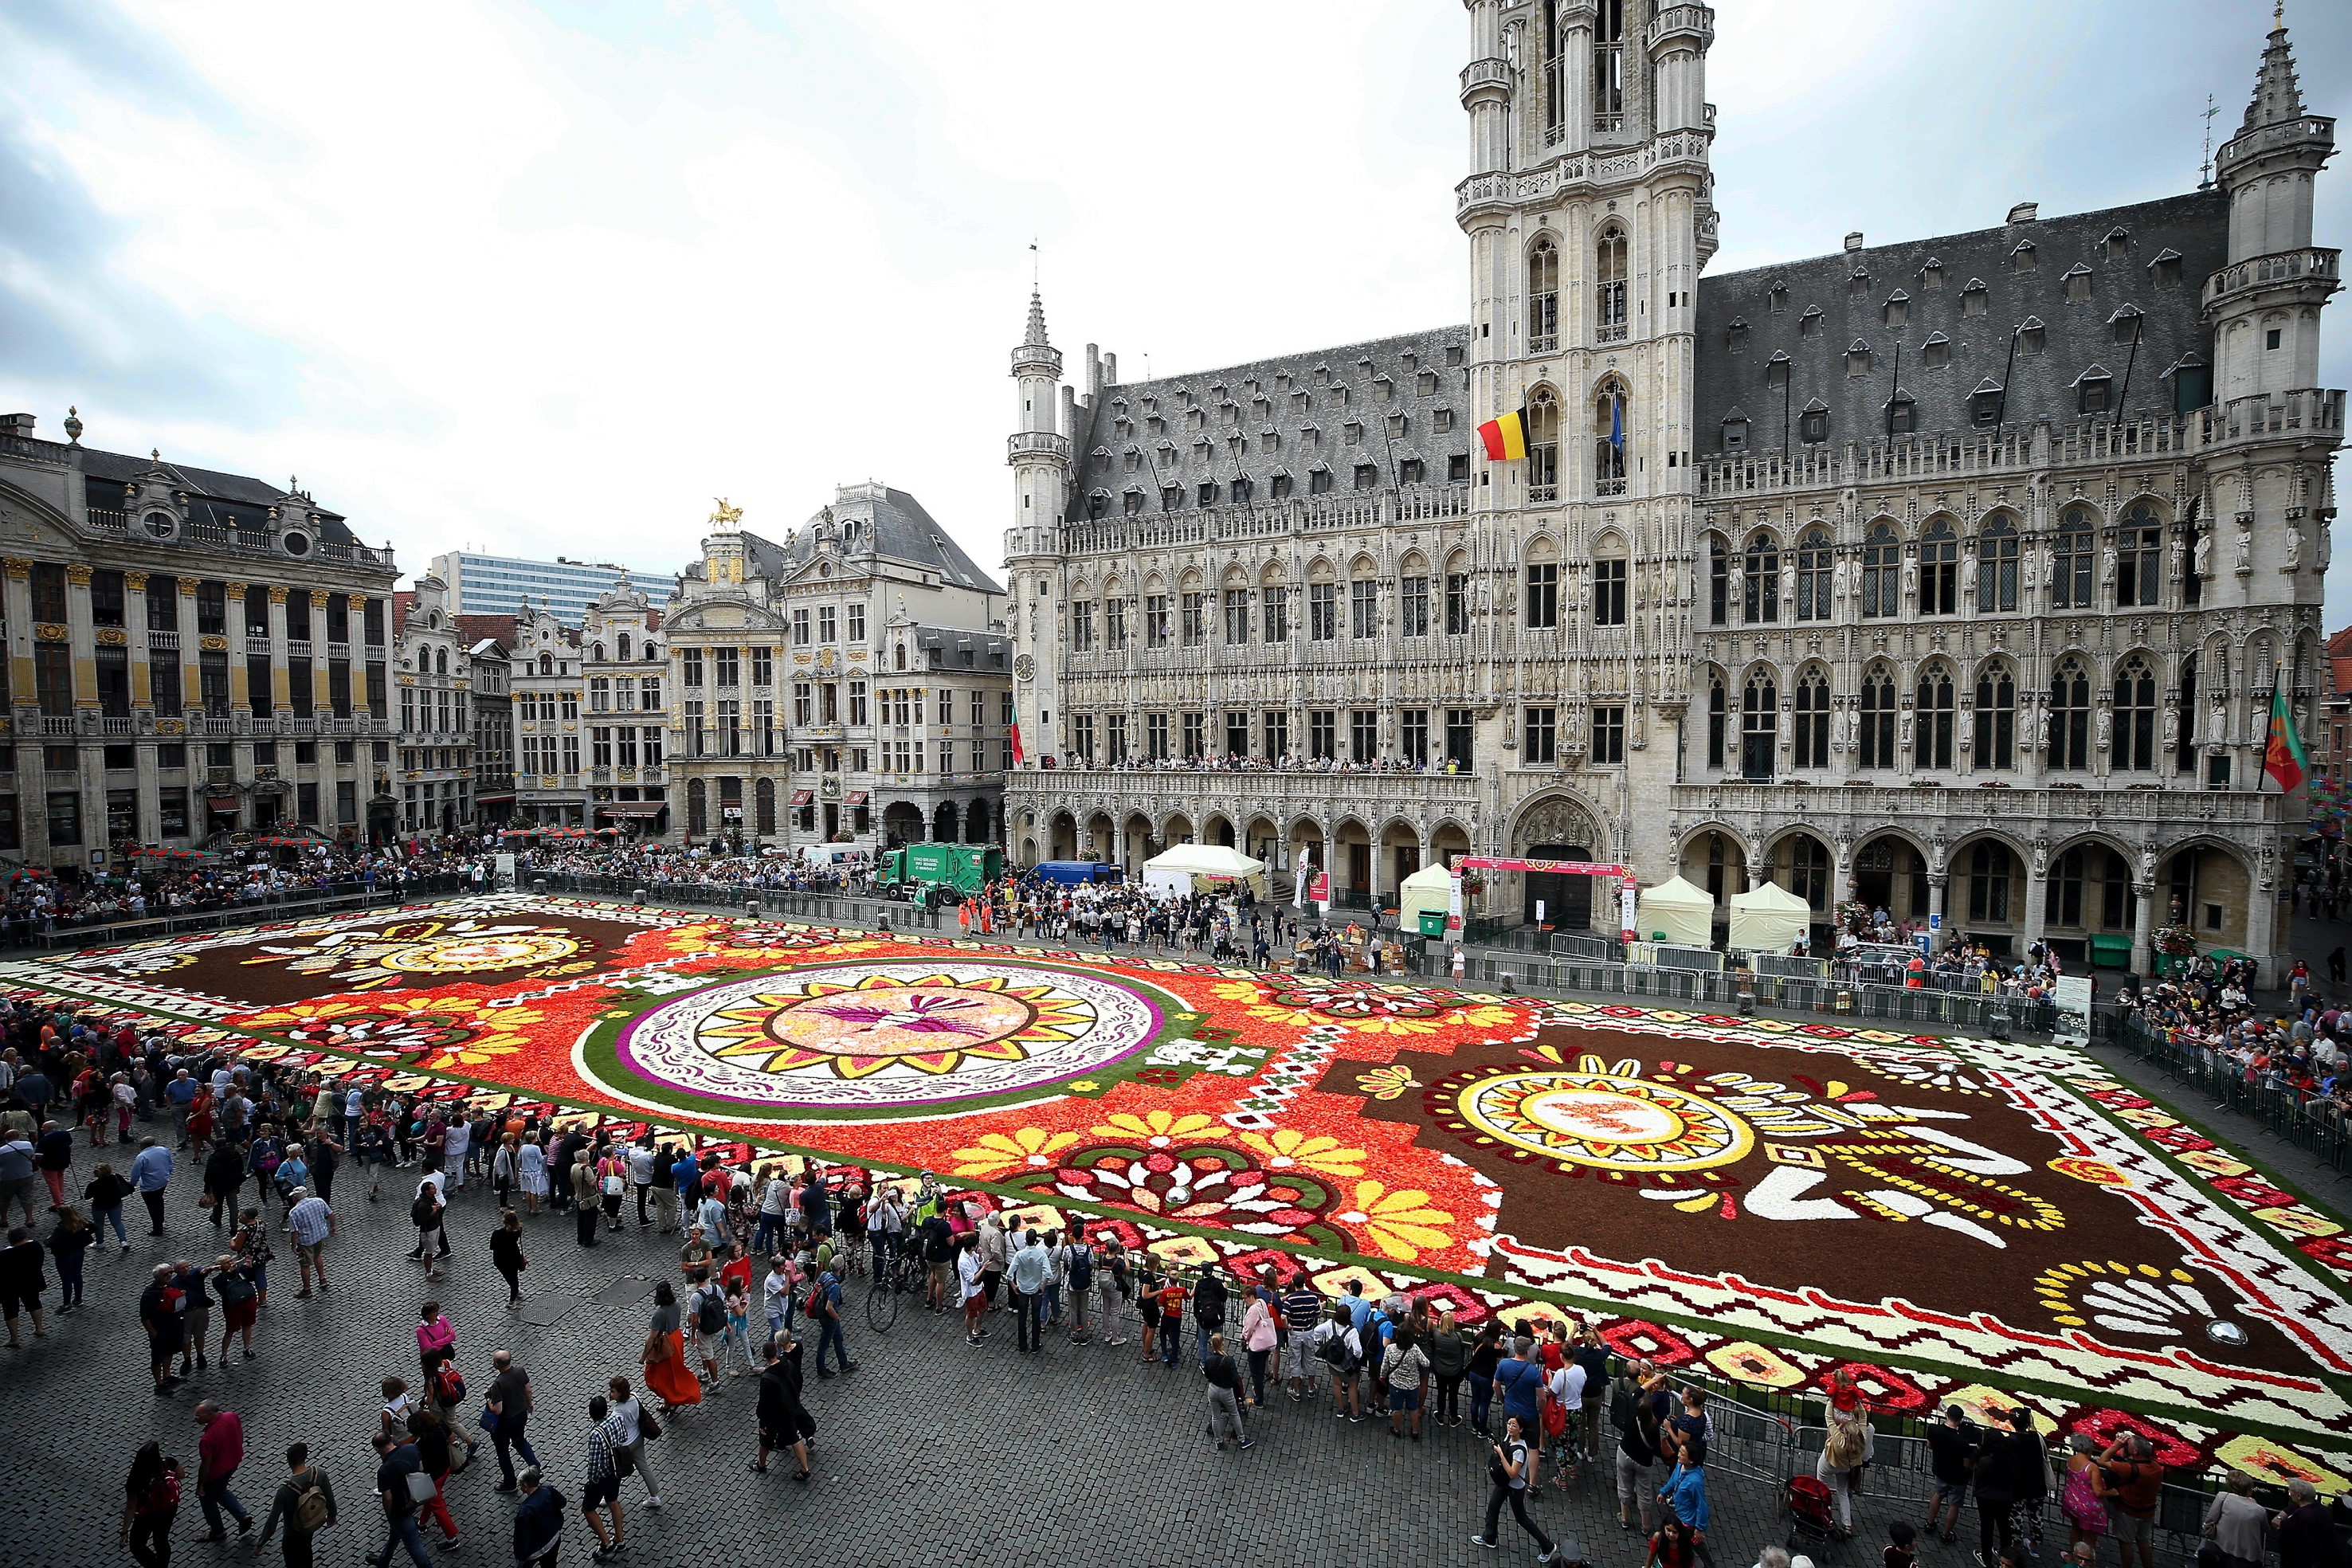 Sight For Sore Eyes: Flower Carpet of Brussels